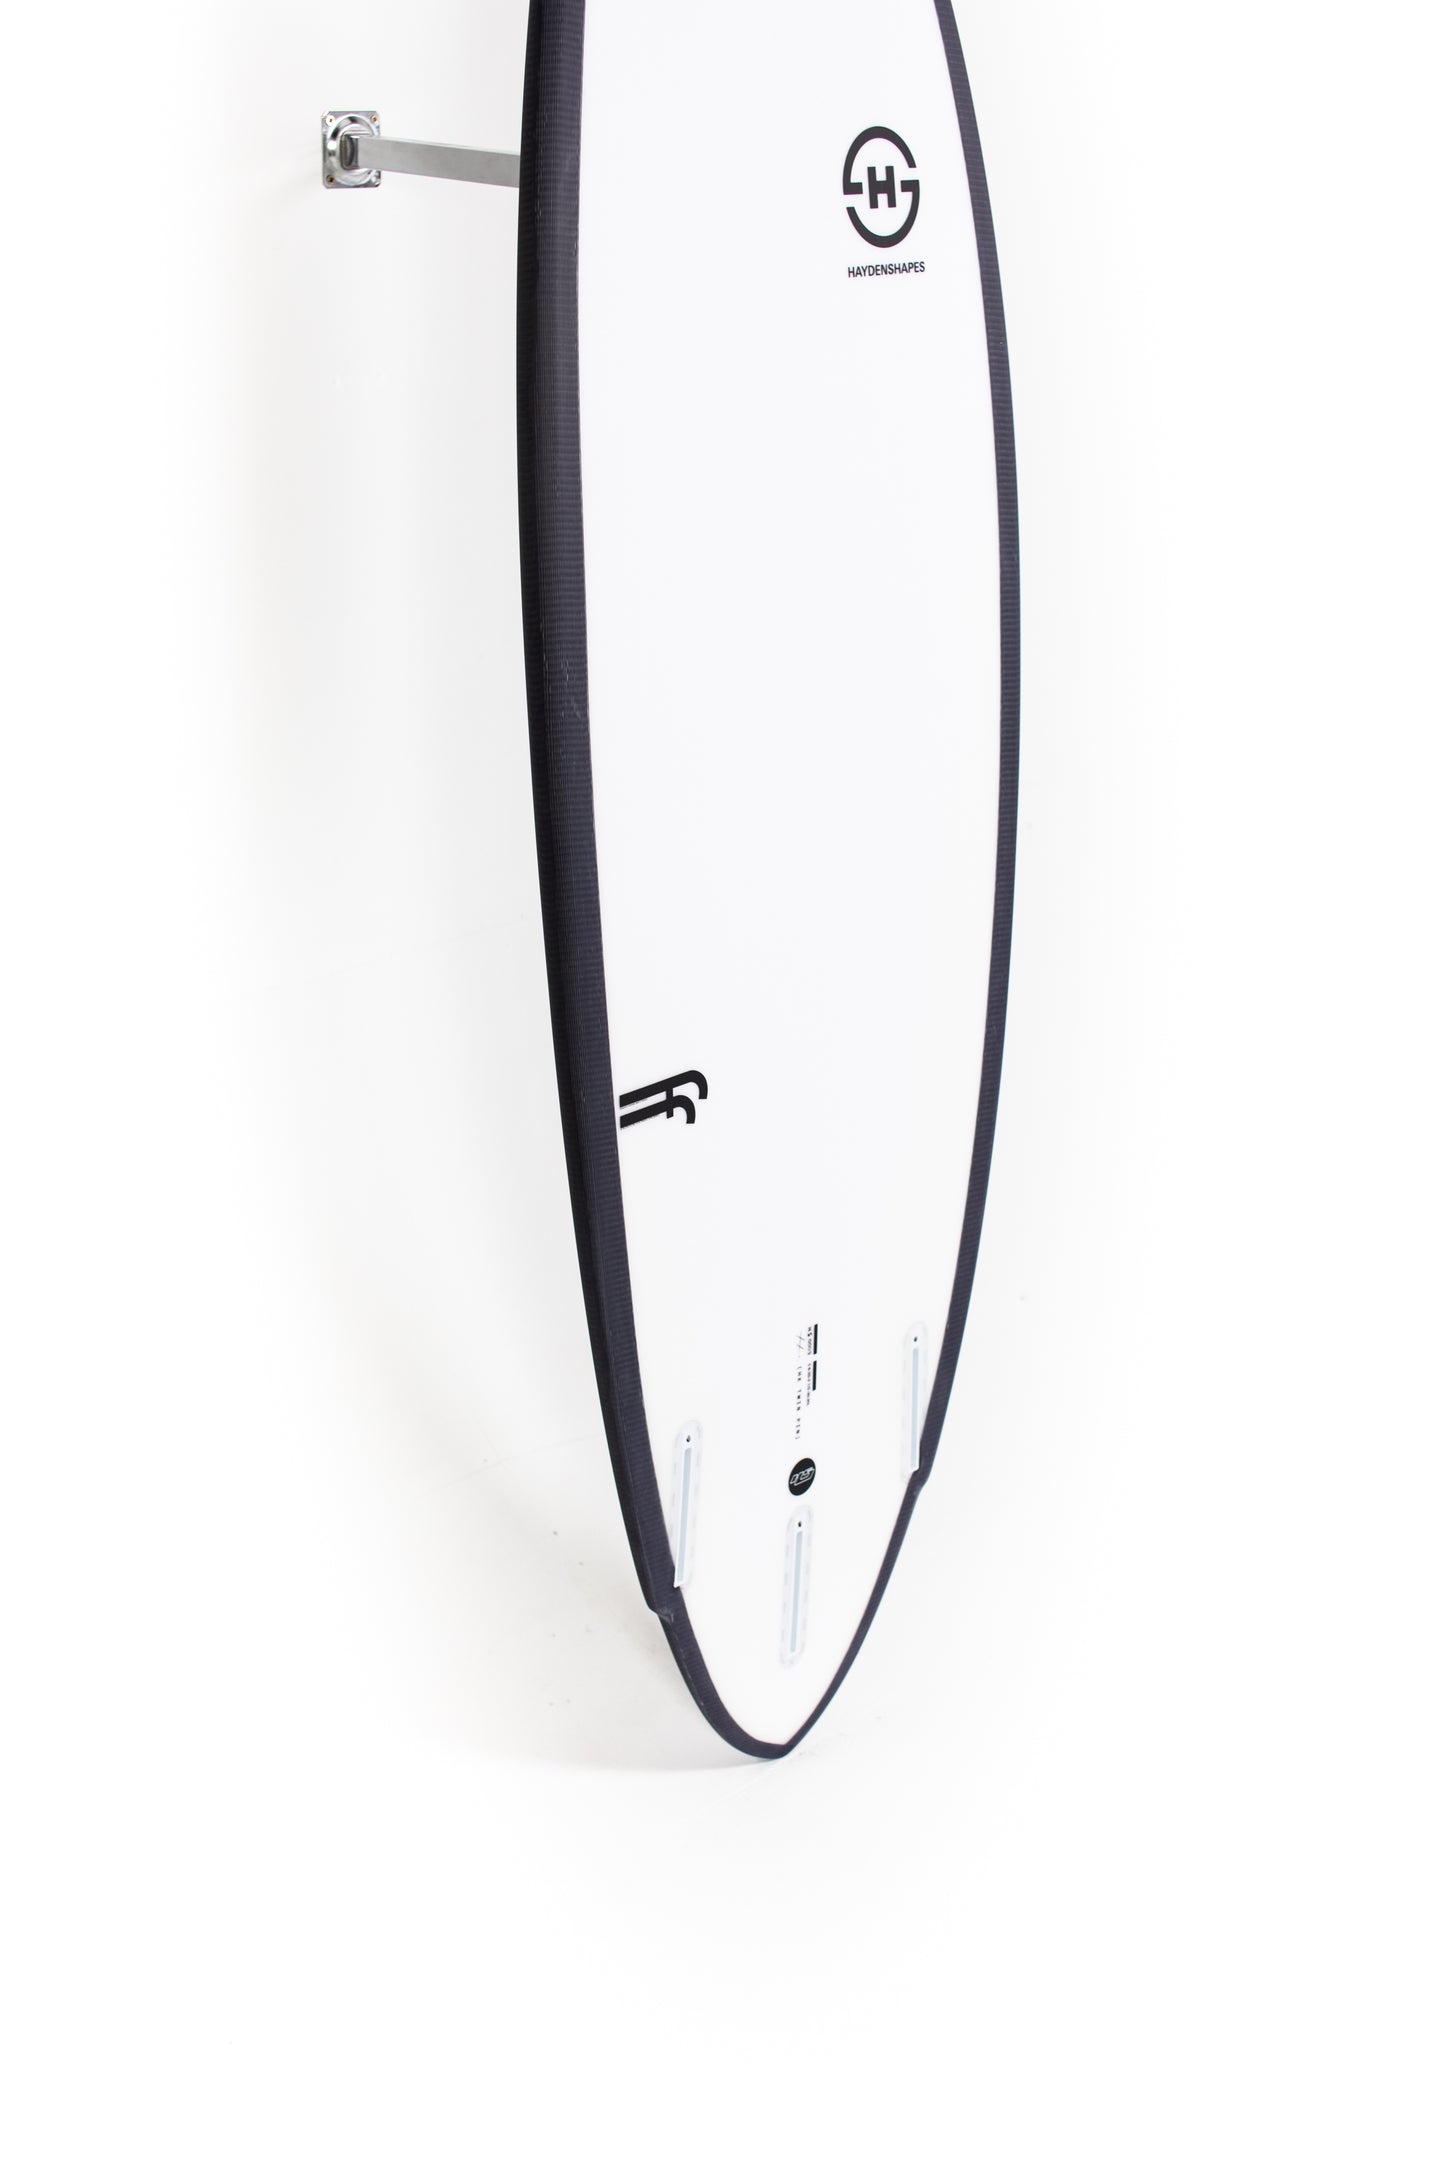 
                  
                    Pukas Surf Shop - HaydenShapes Surfboard - HYPTO KRYPTO TWIN PIN - 5'8" X 20" X 2 1/2" - 30.95L
                  
                